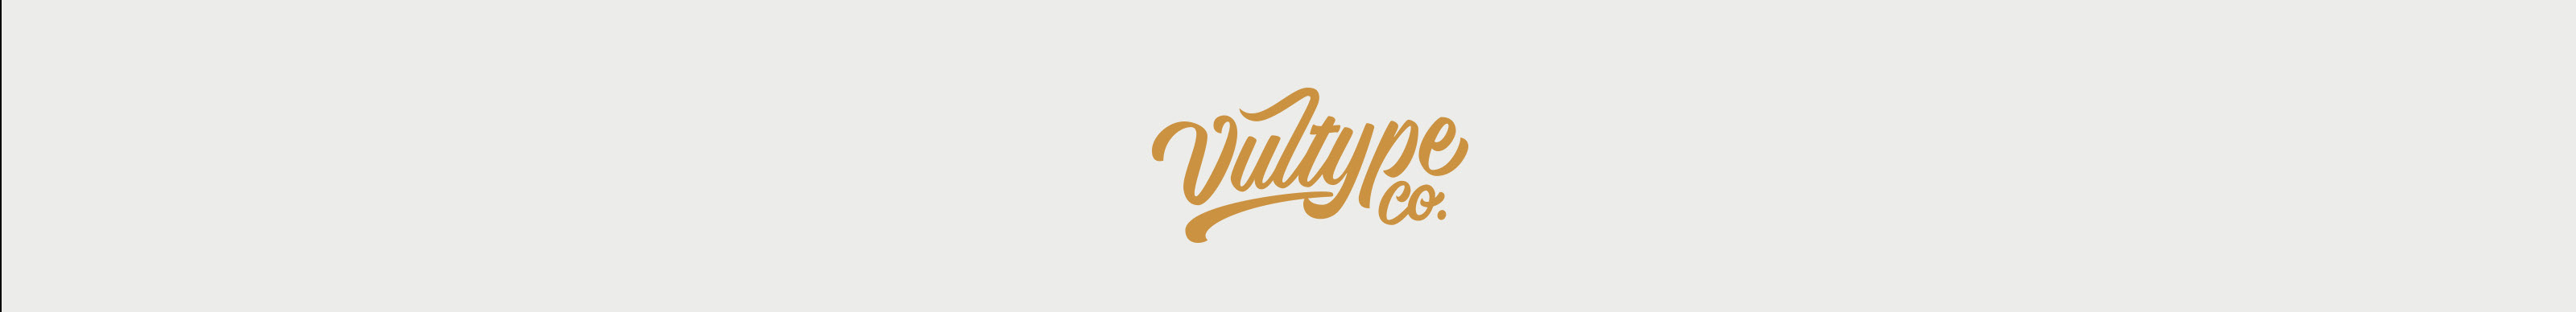 Vultype Design Co.'s profile banner